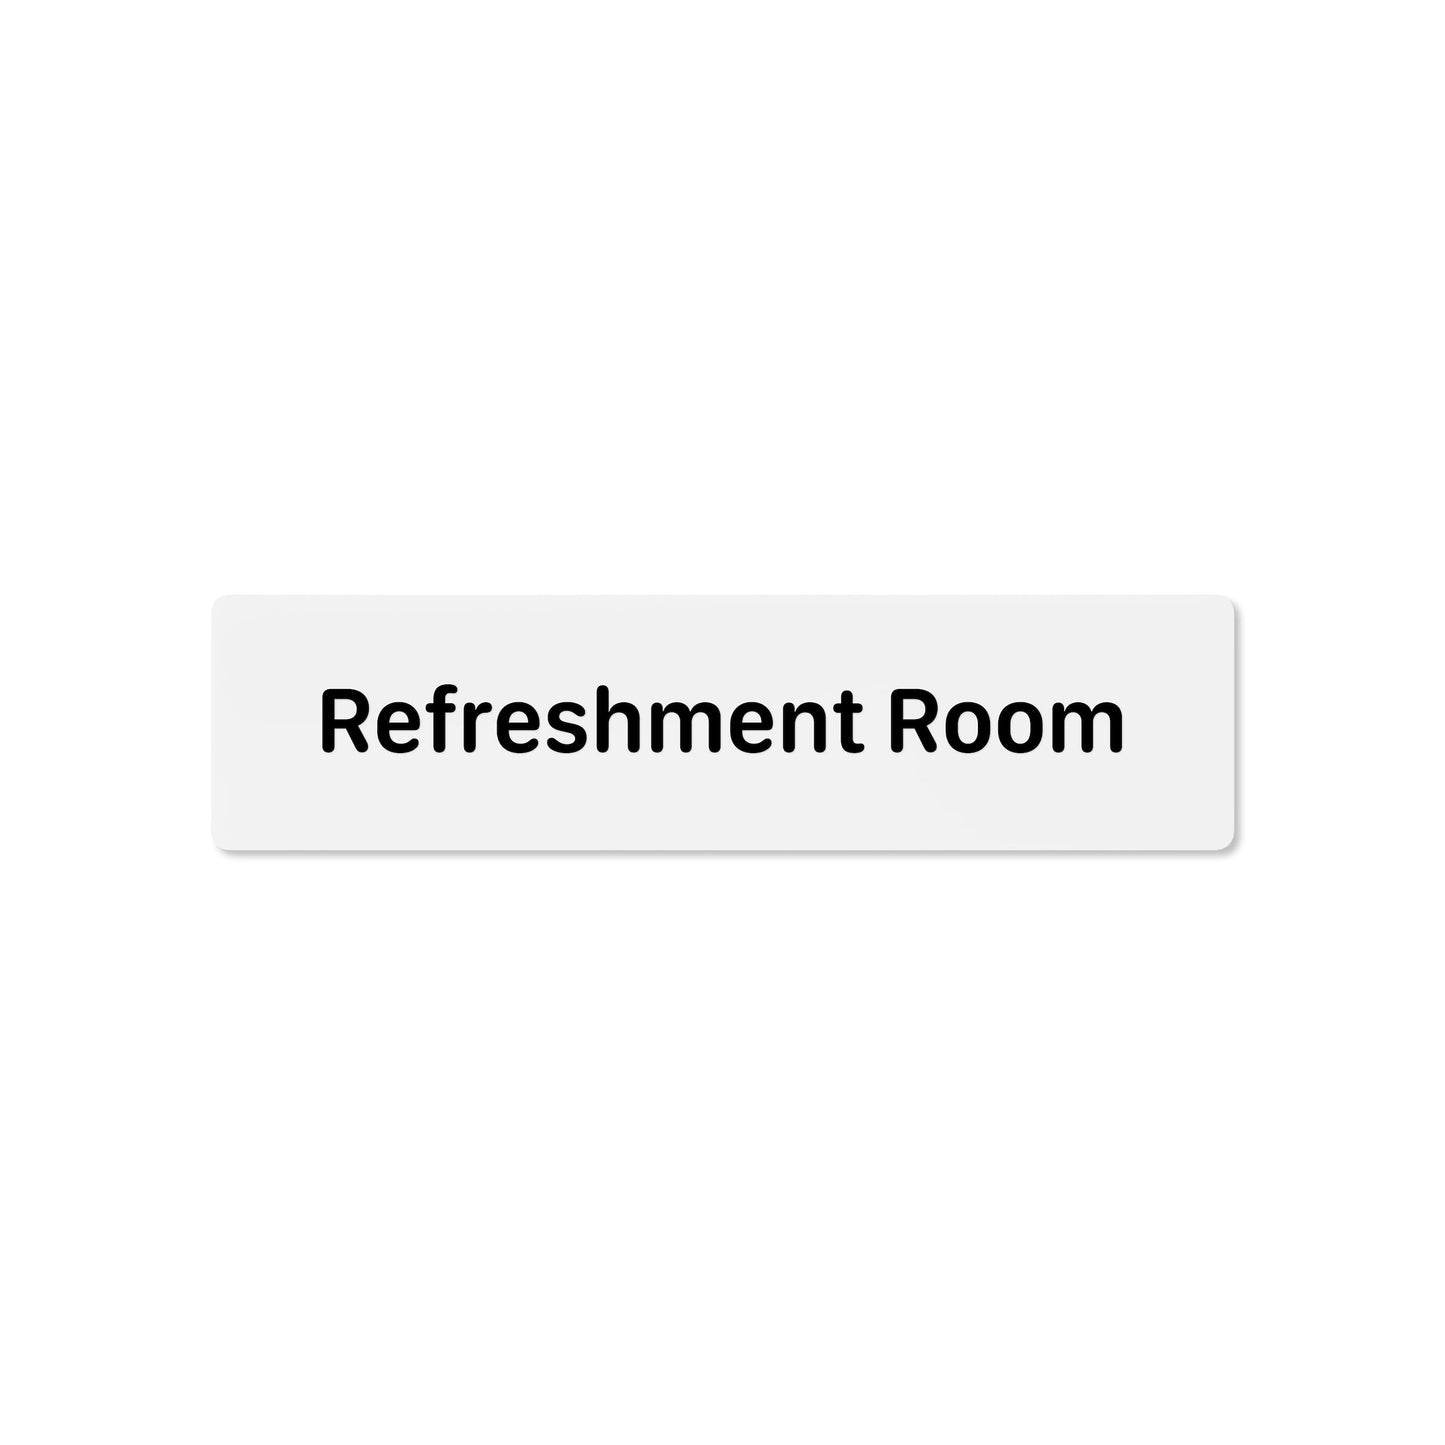 Refreshment Room